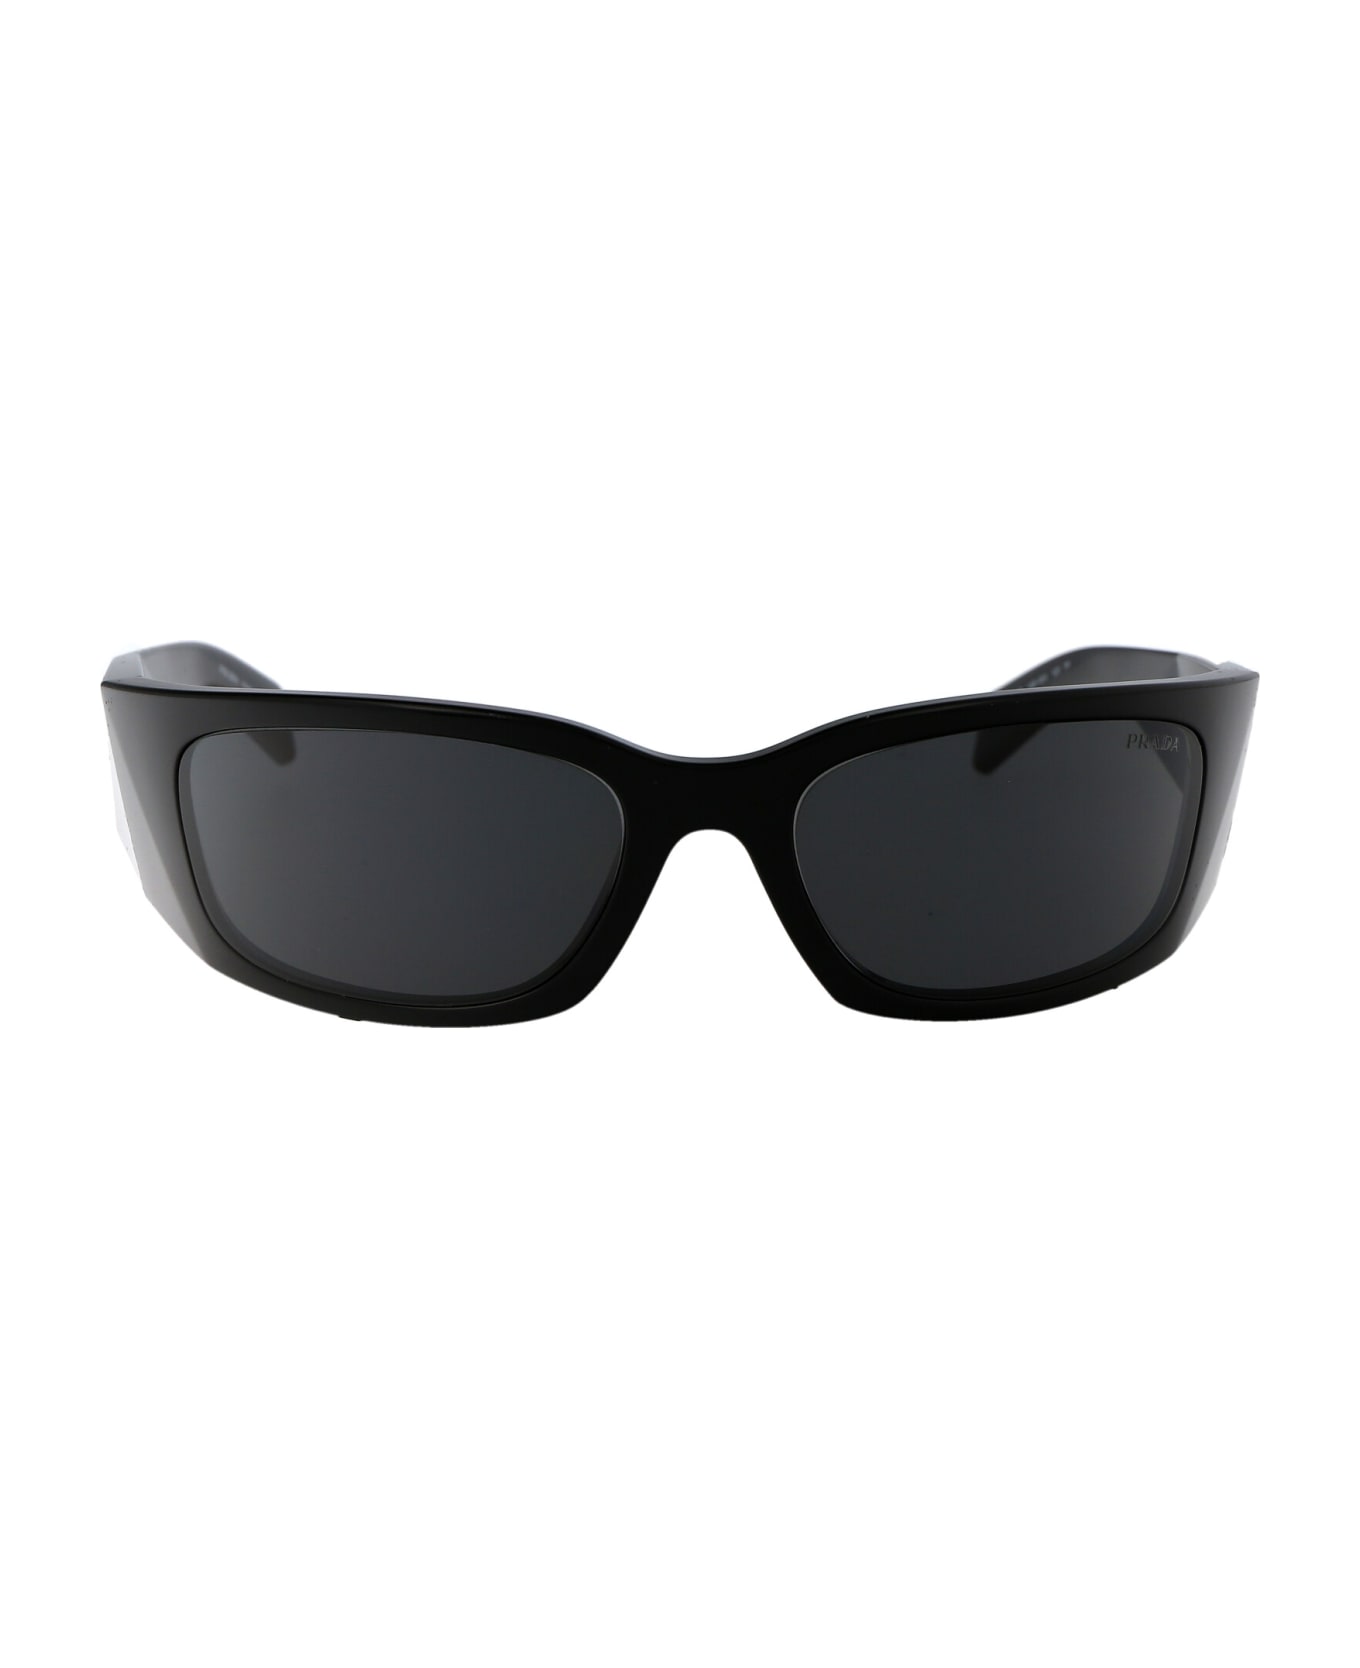 Prada Eyewear 0pr A19s Sunglasses - 1AB5S0 BLACK